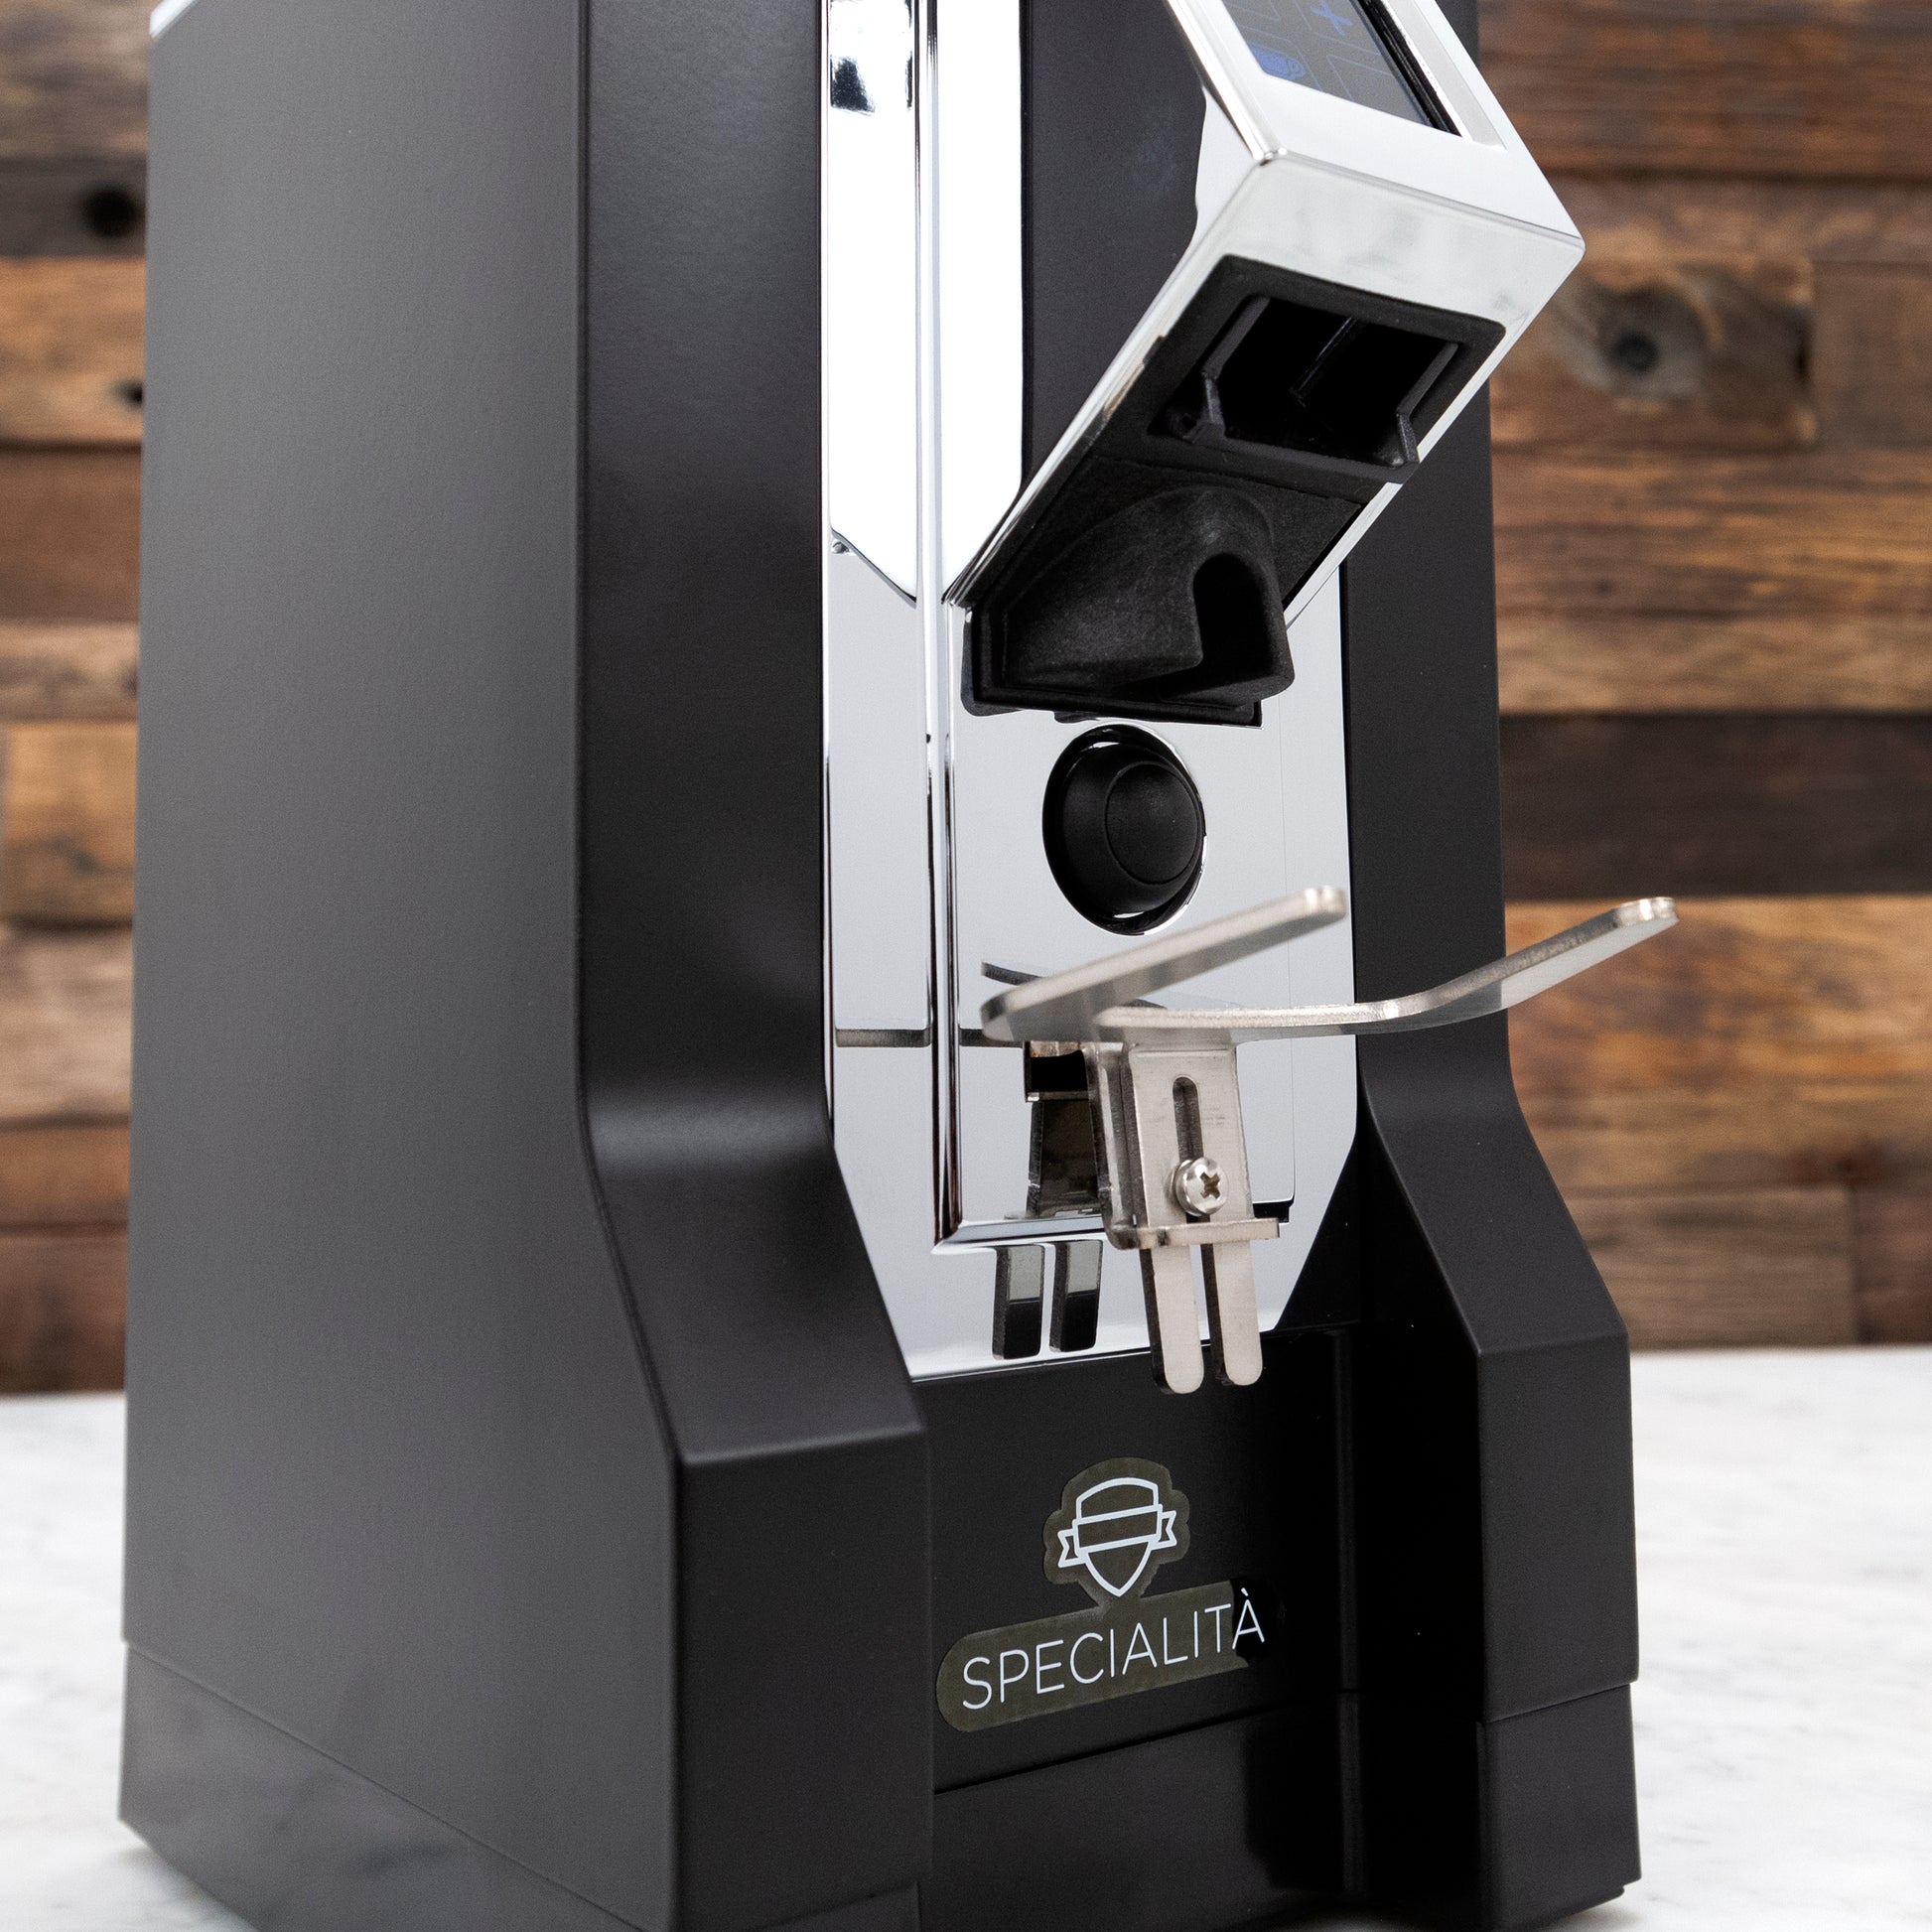 Eureka Mignon Specialita Espresso Grinder in Matte Black – Whole